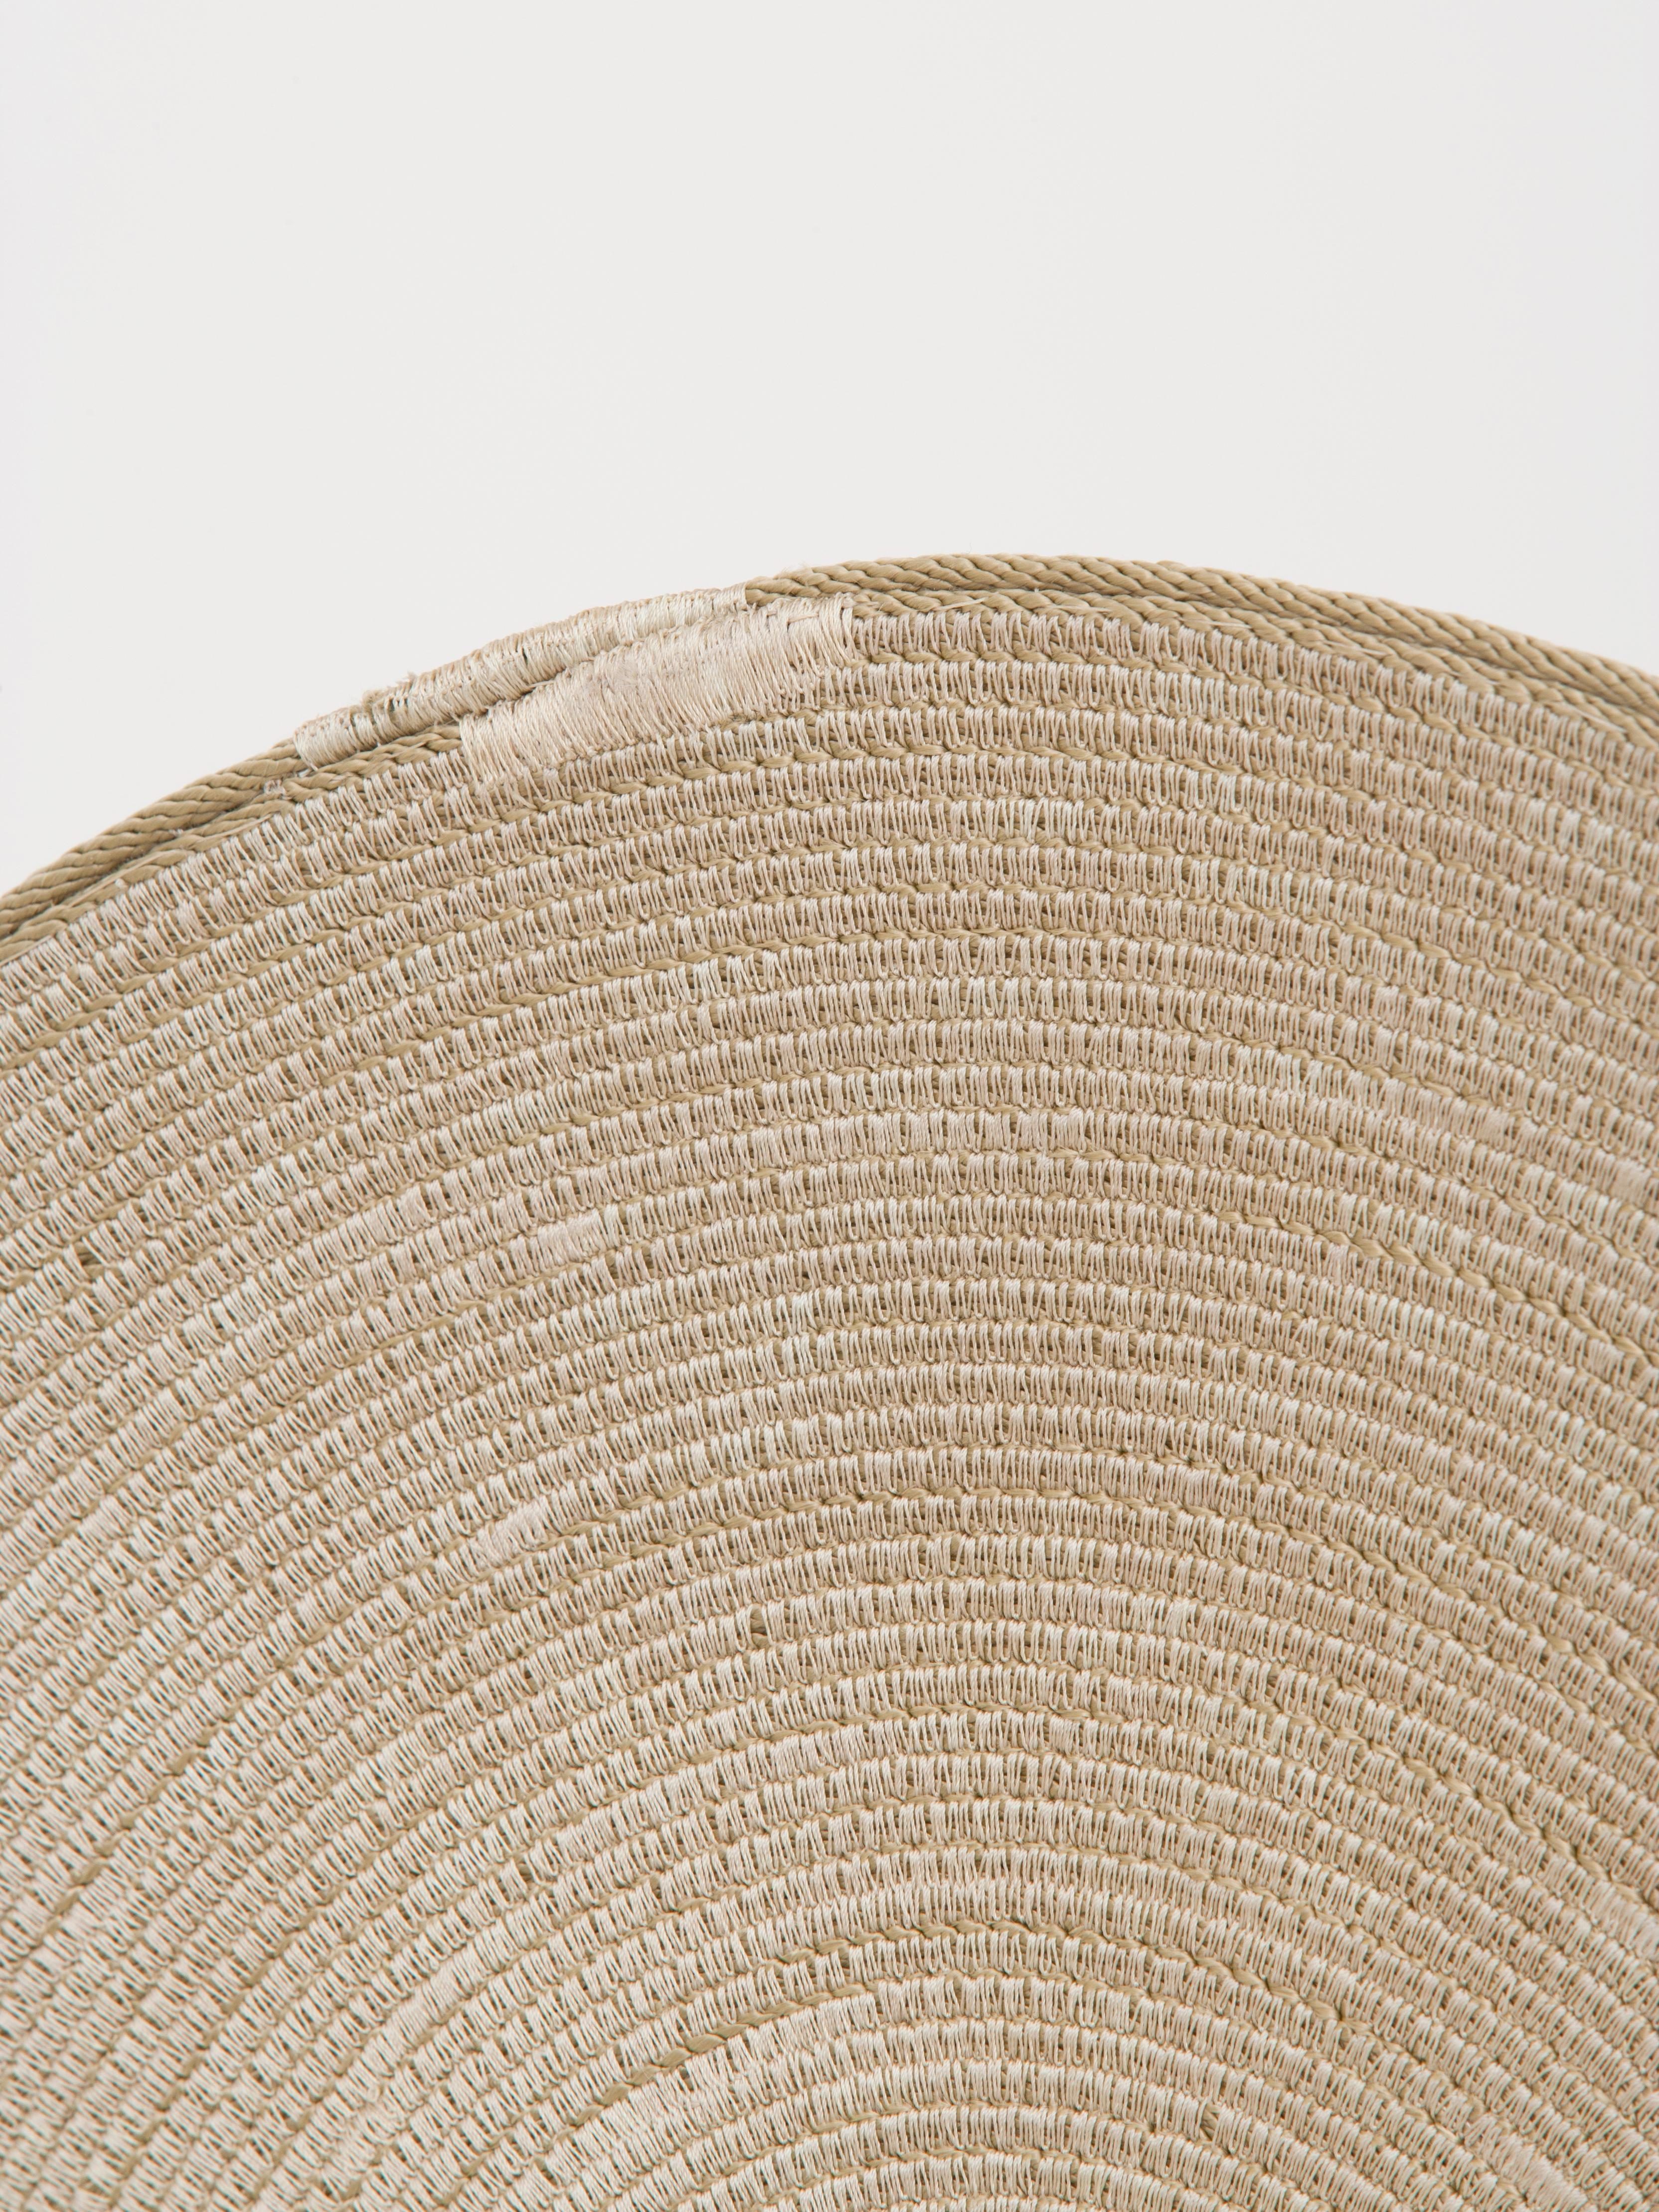 Nord-américain « Kogetsudai « beige », récipient sculptural en fibre de corde enroulée de Doug Johnston, 2015